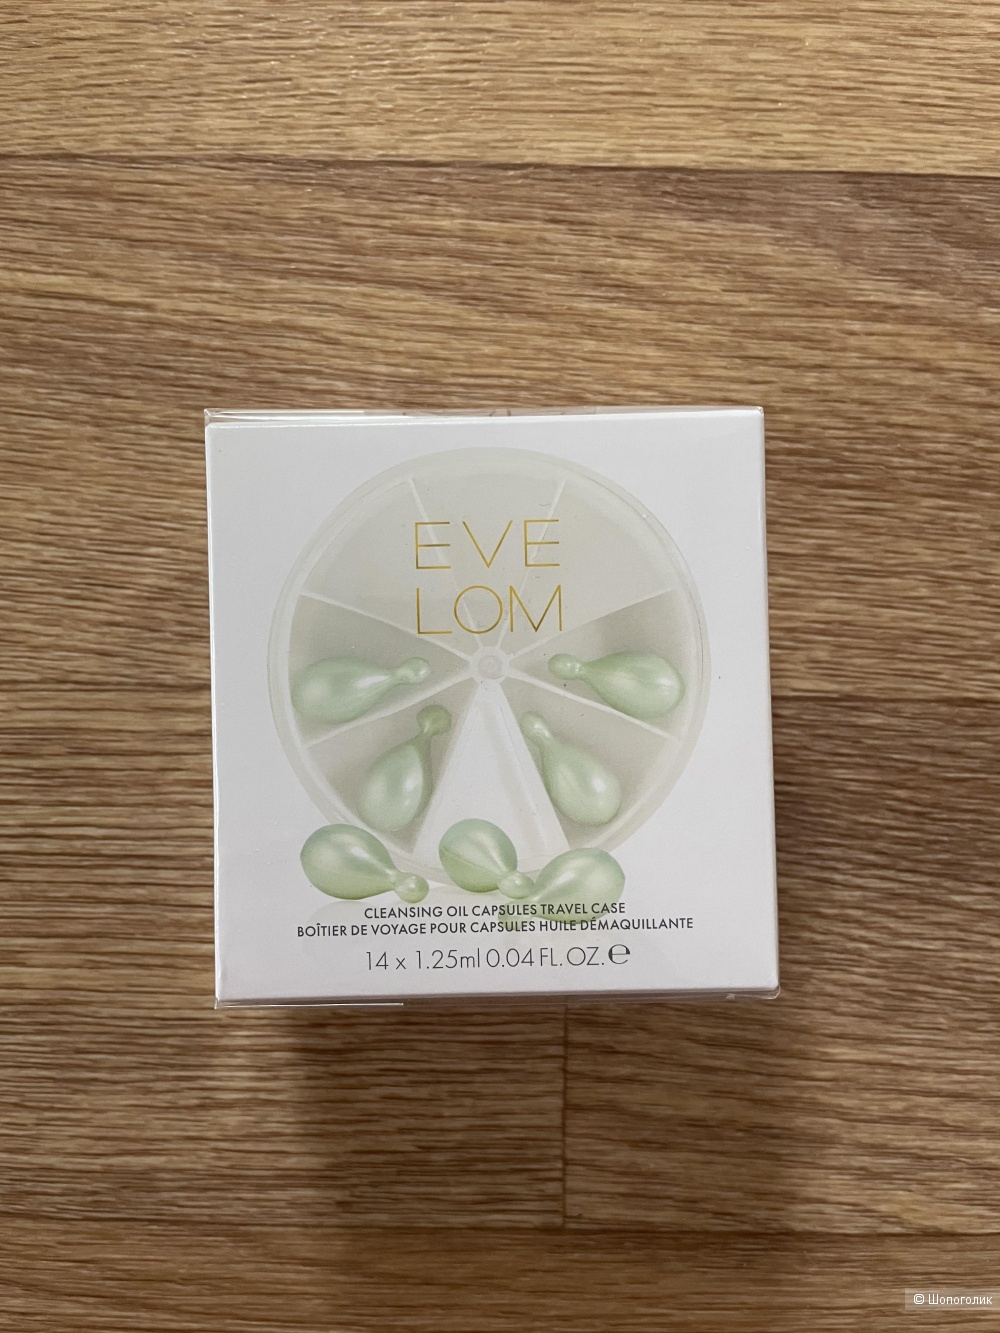 Eve Lom cleansing oil capsules travel case